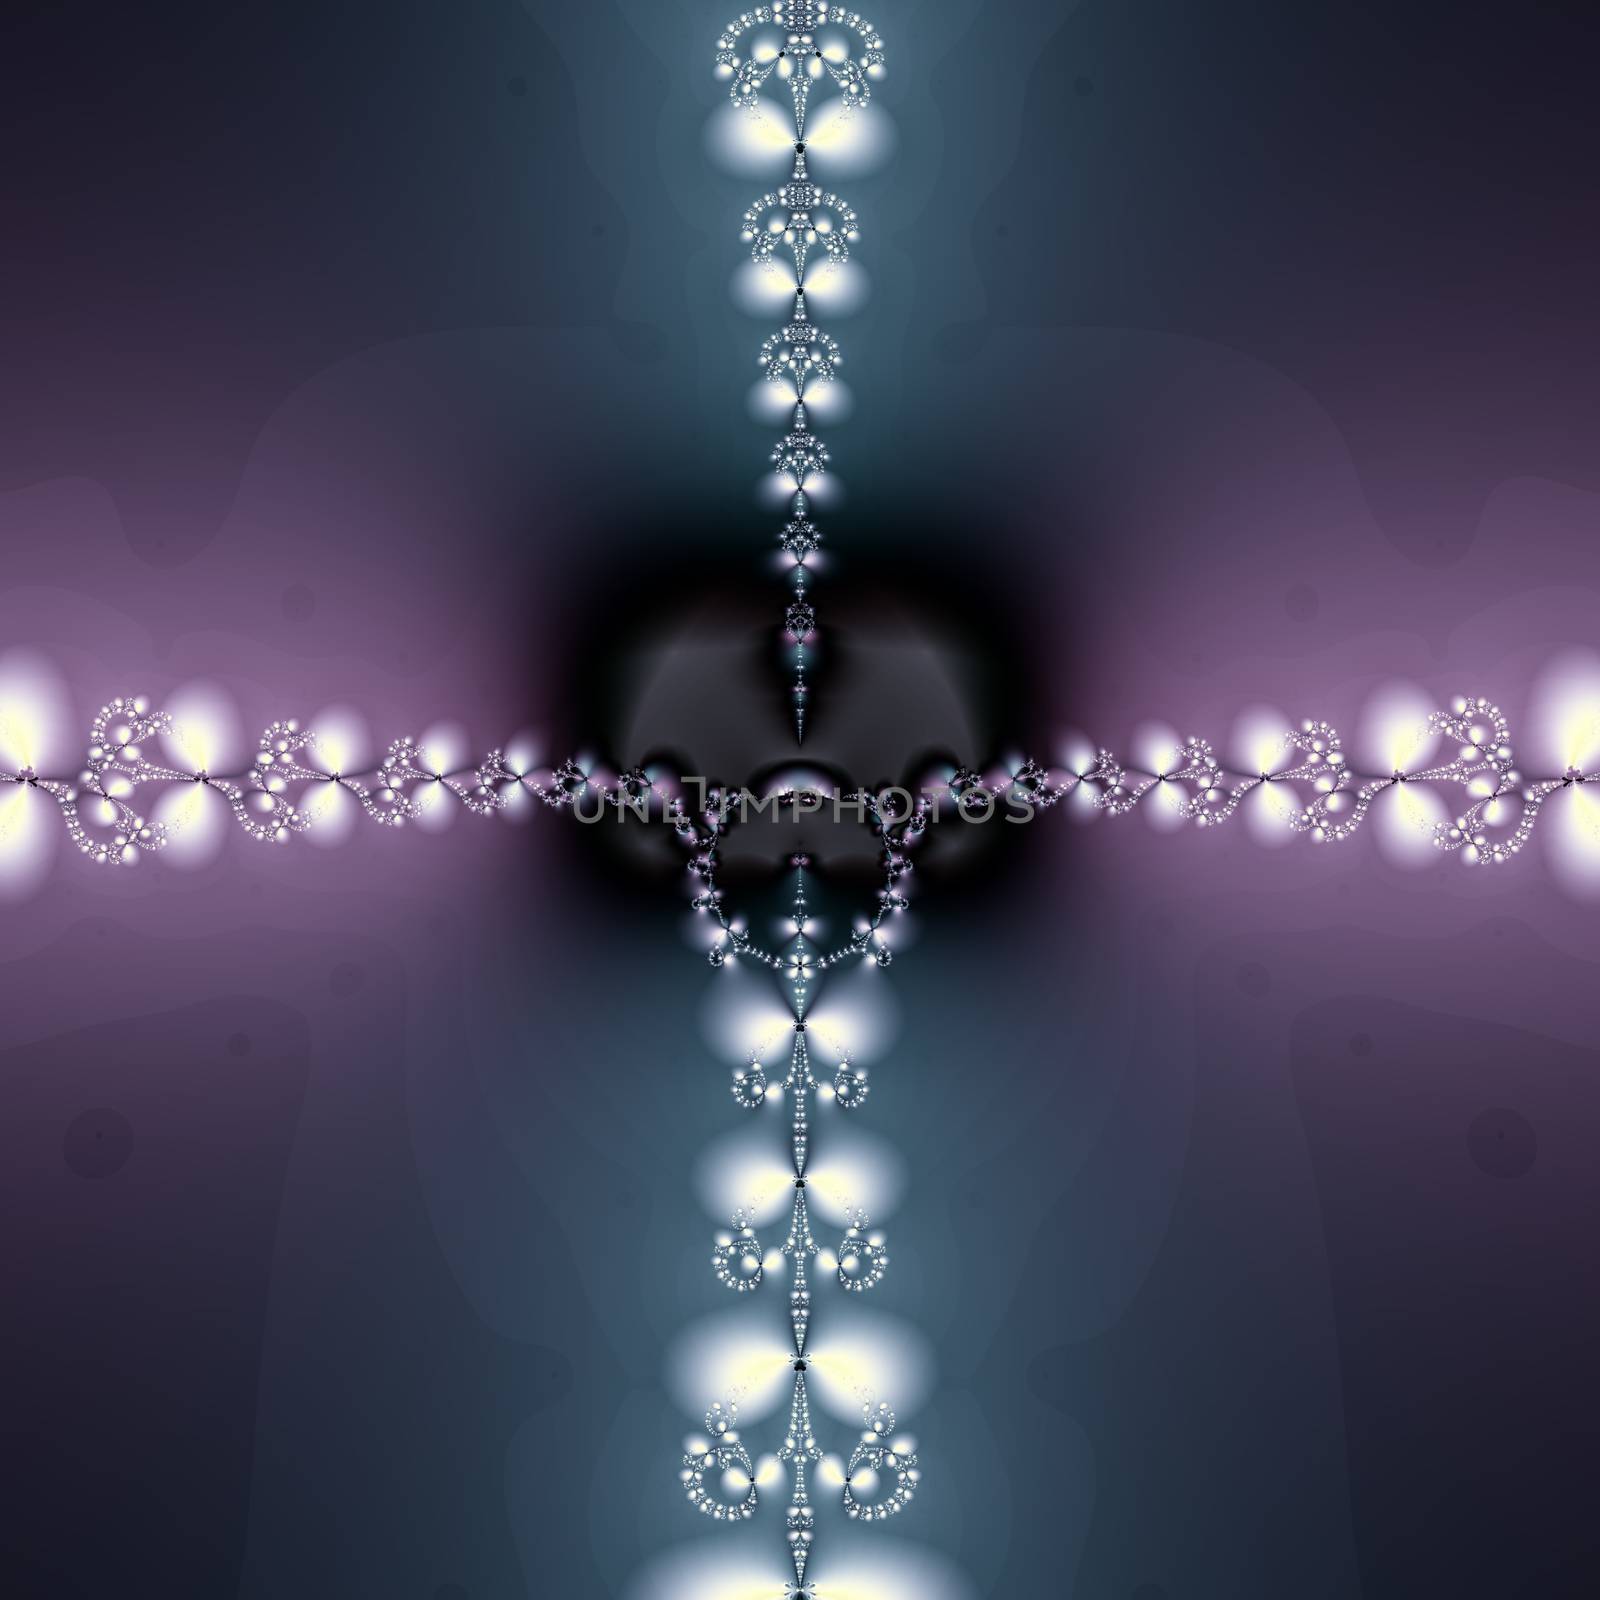 Elegant fractal design, abstract psychedelic art, purple song